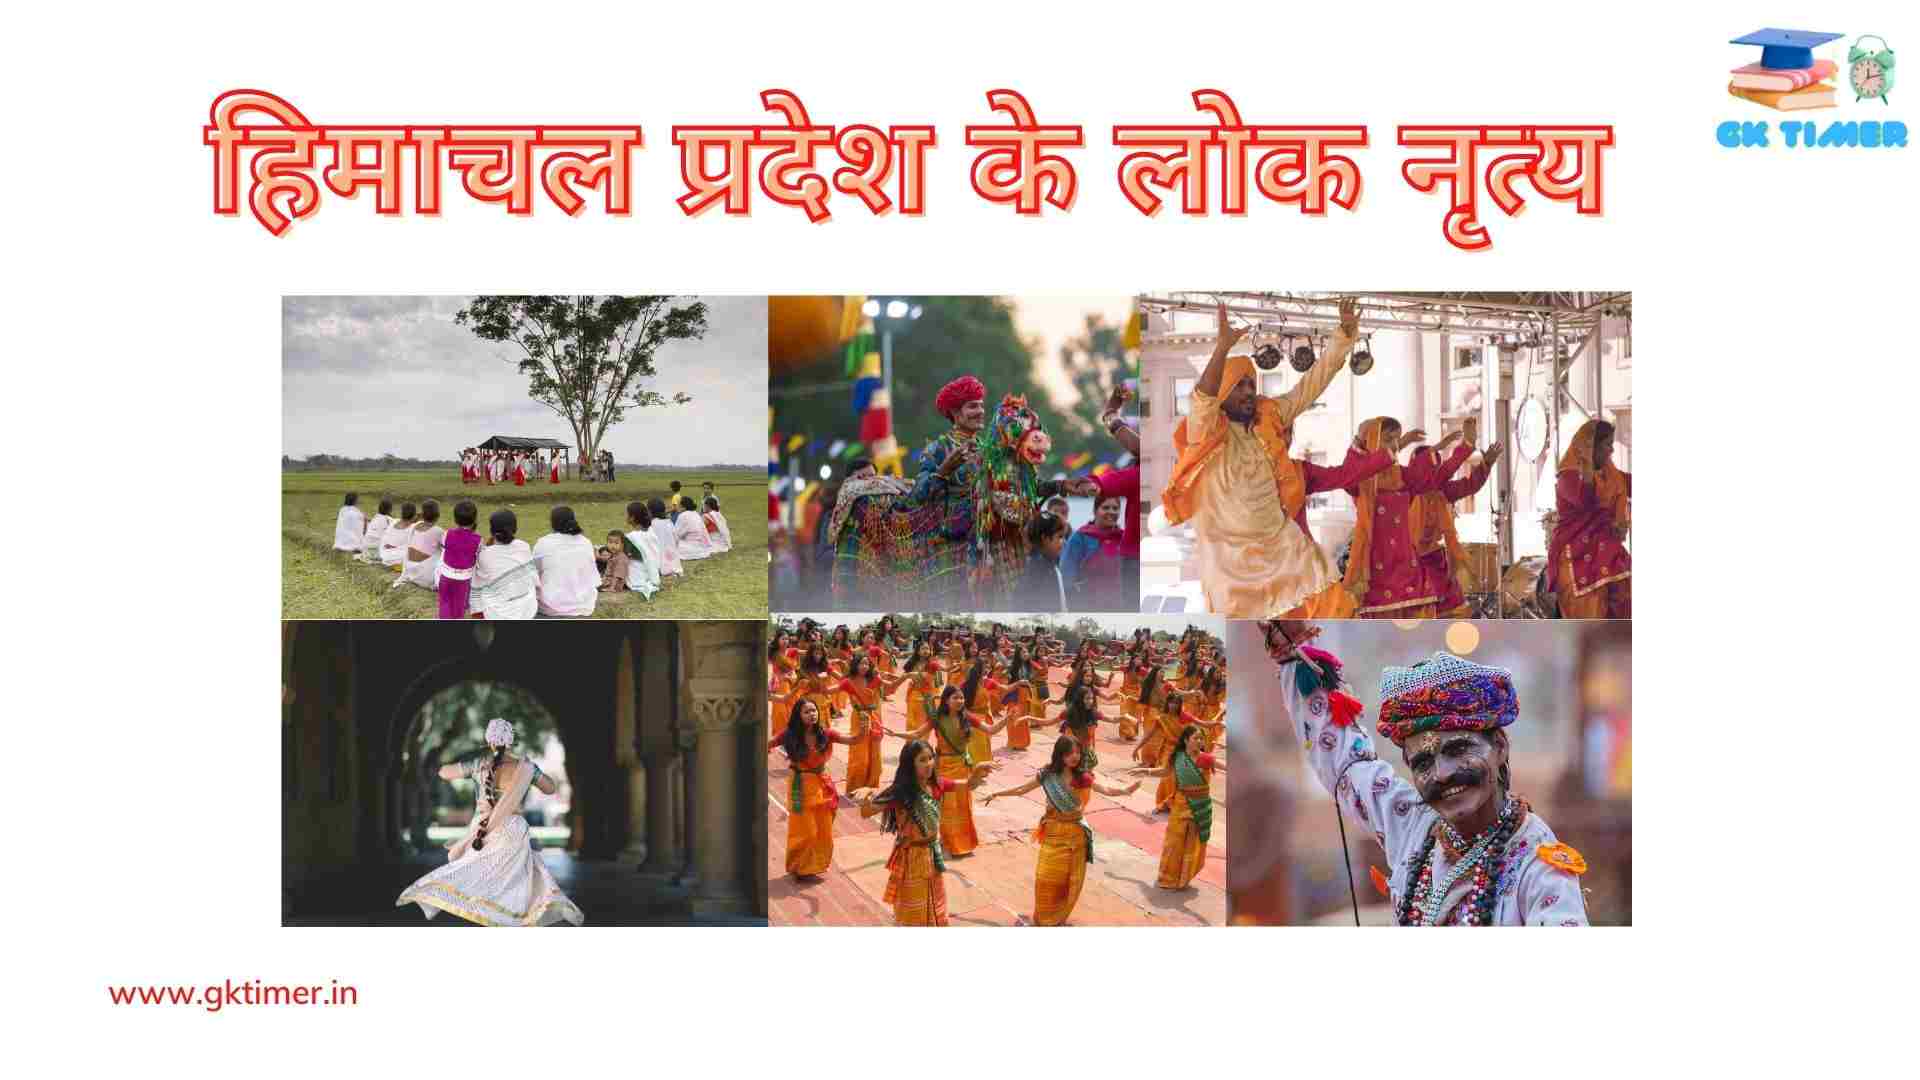 हिमाचल प्रदेश के प्रमुख लोक नृत्य(नाटी, डांगी, कयांग माला, राक्षस नृत्य) | Traditional folk dances of Himachal Pradesh in Hindi